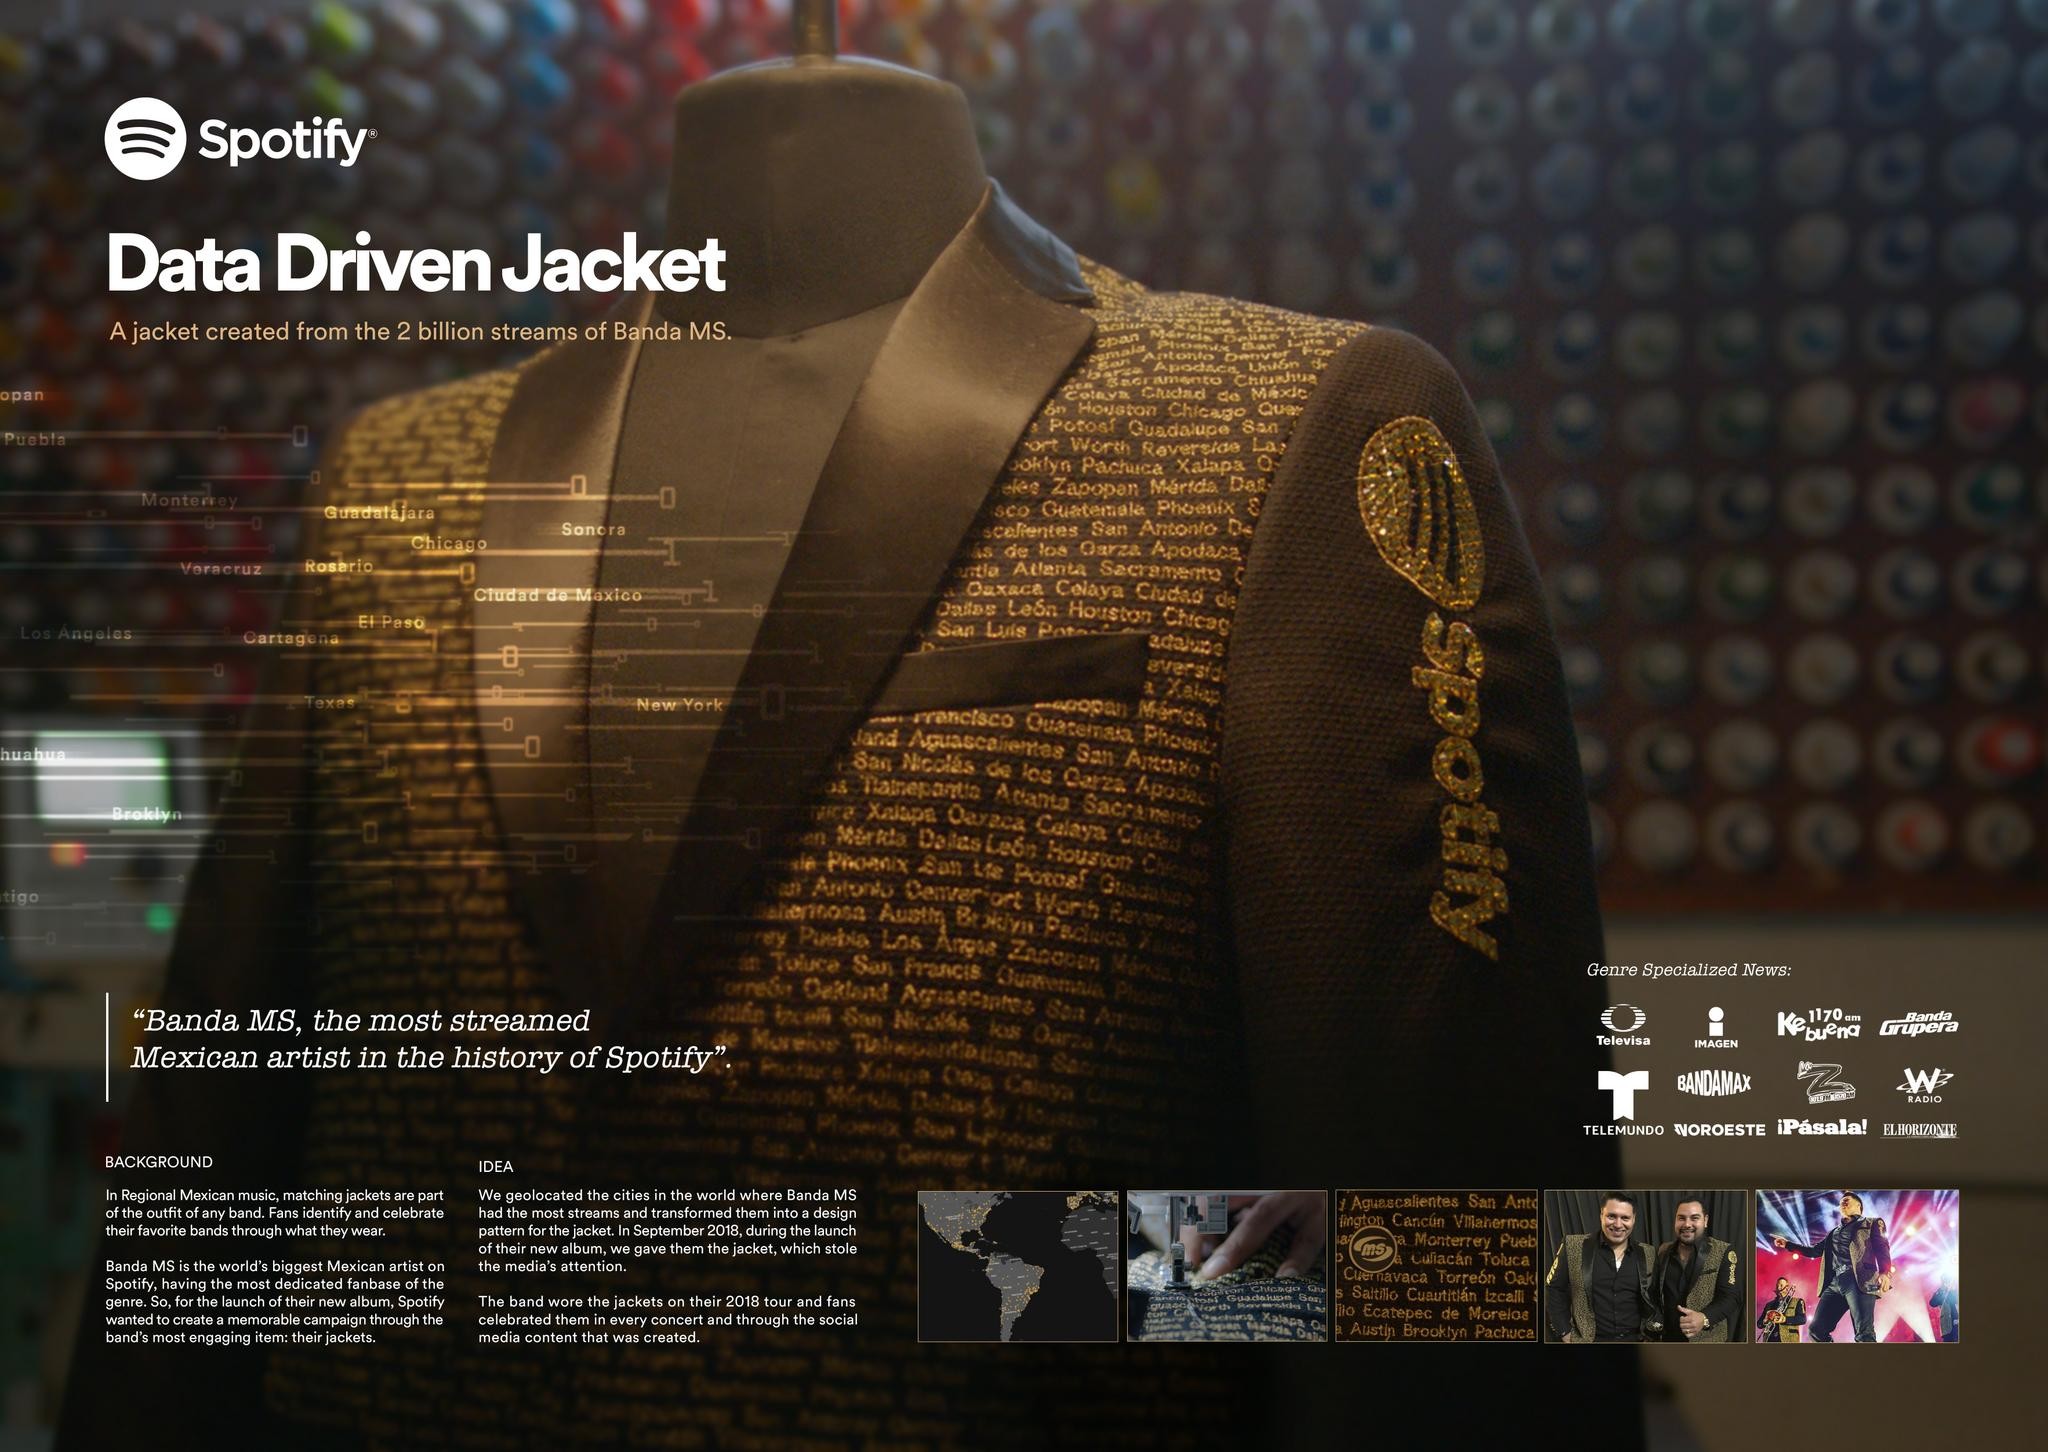 Data Driven Jacket by Spotify